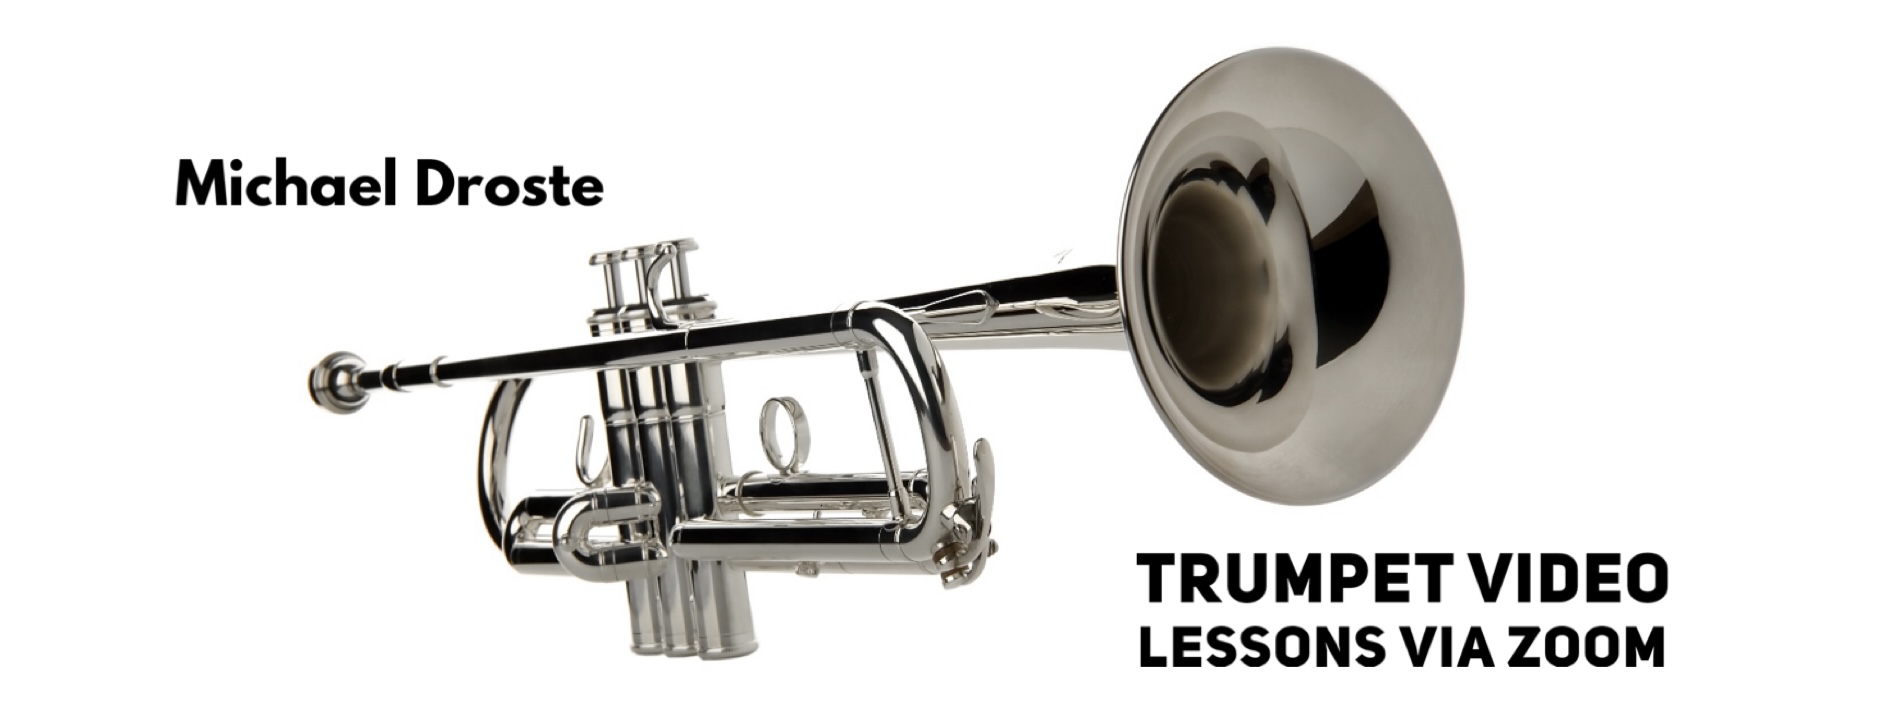 Trumpet video lessons via zoom